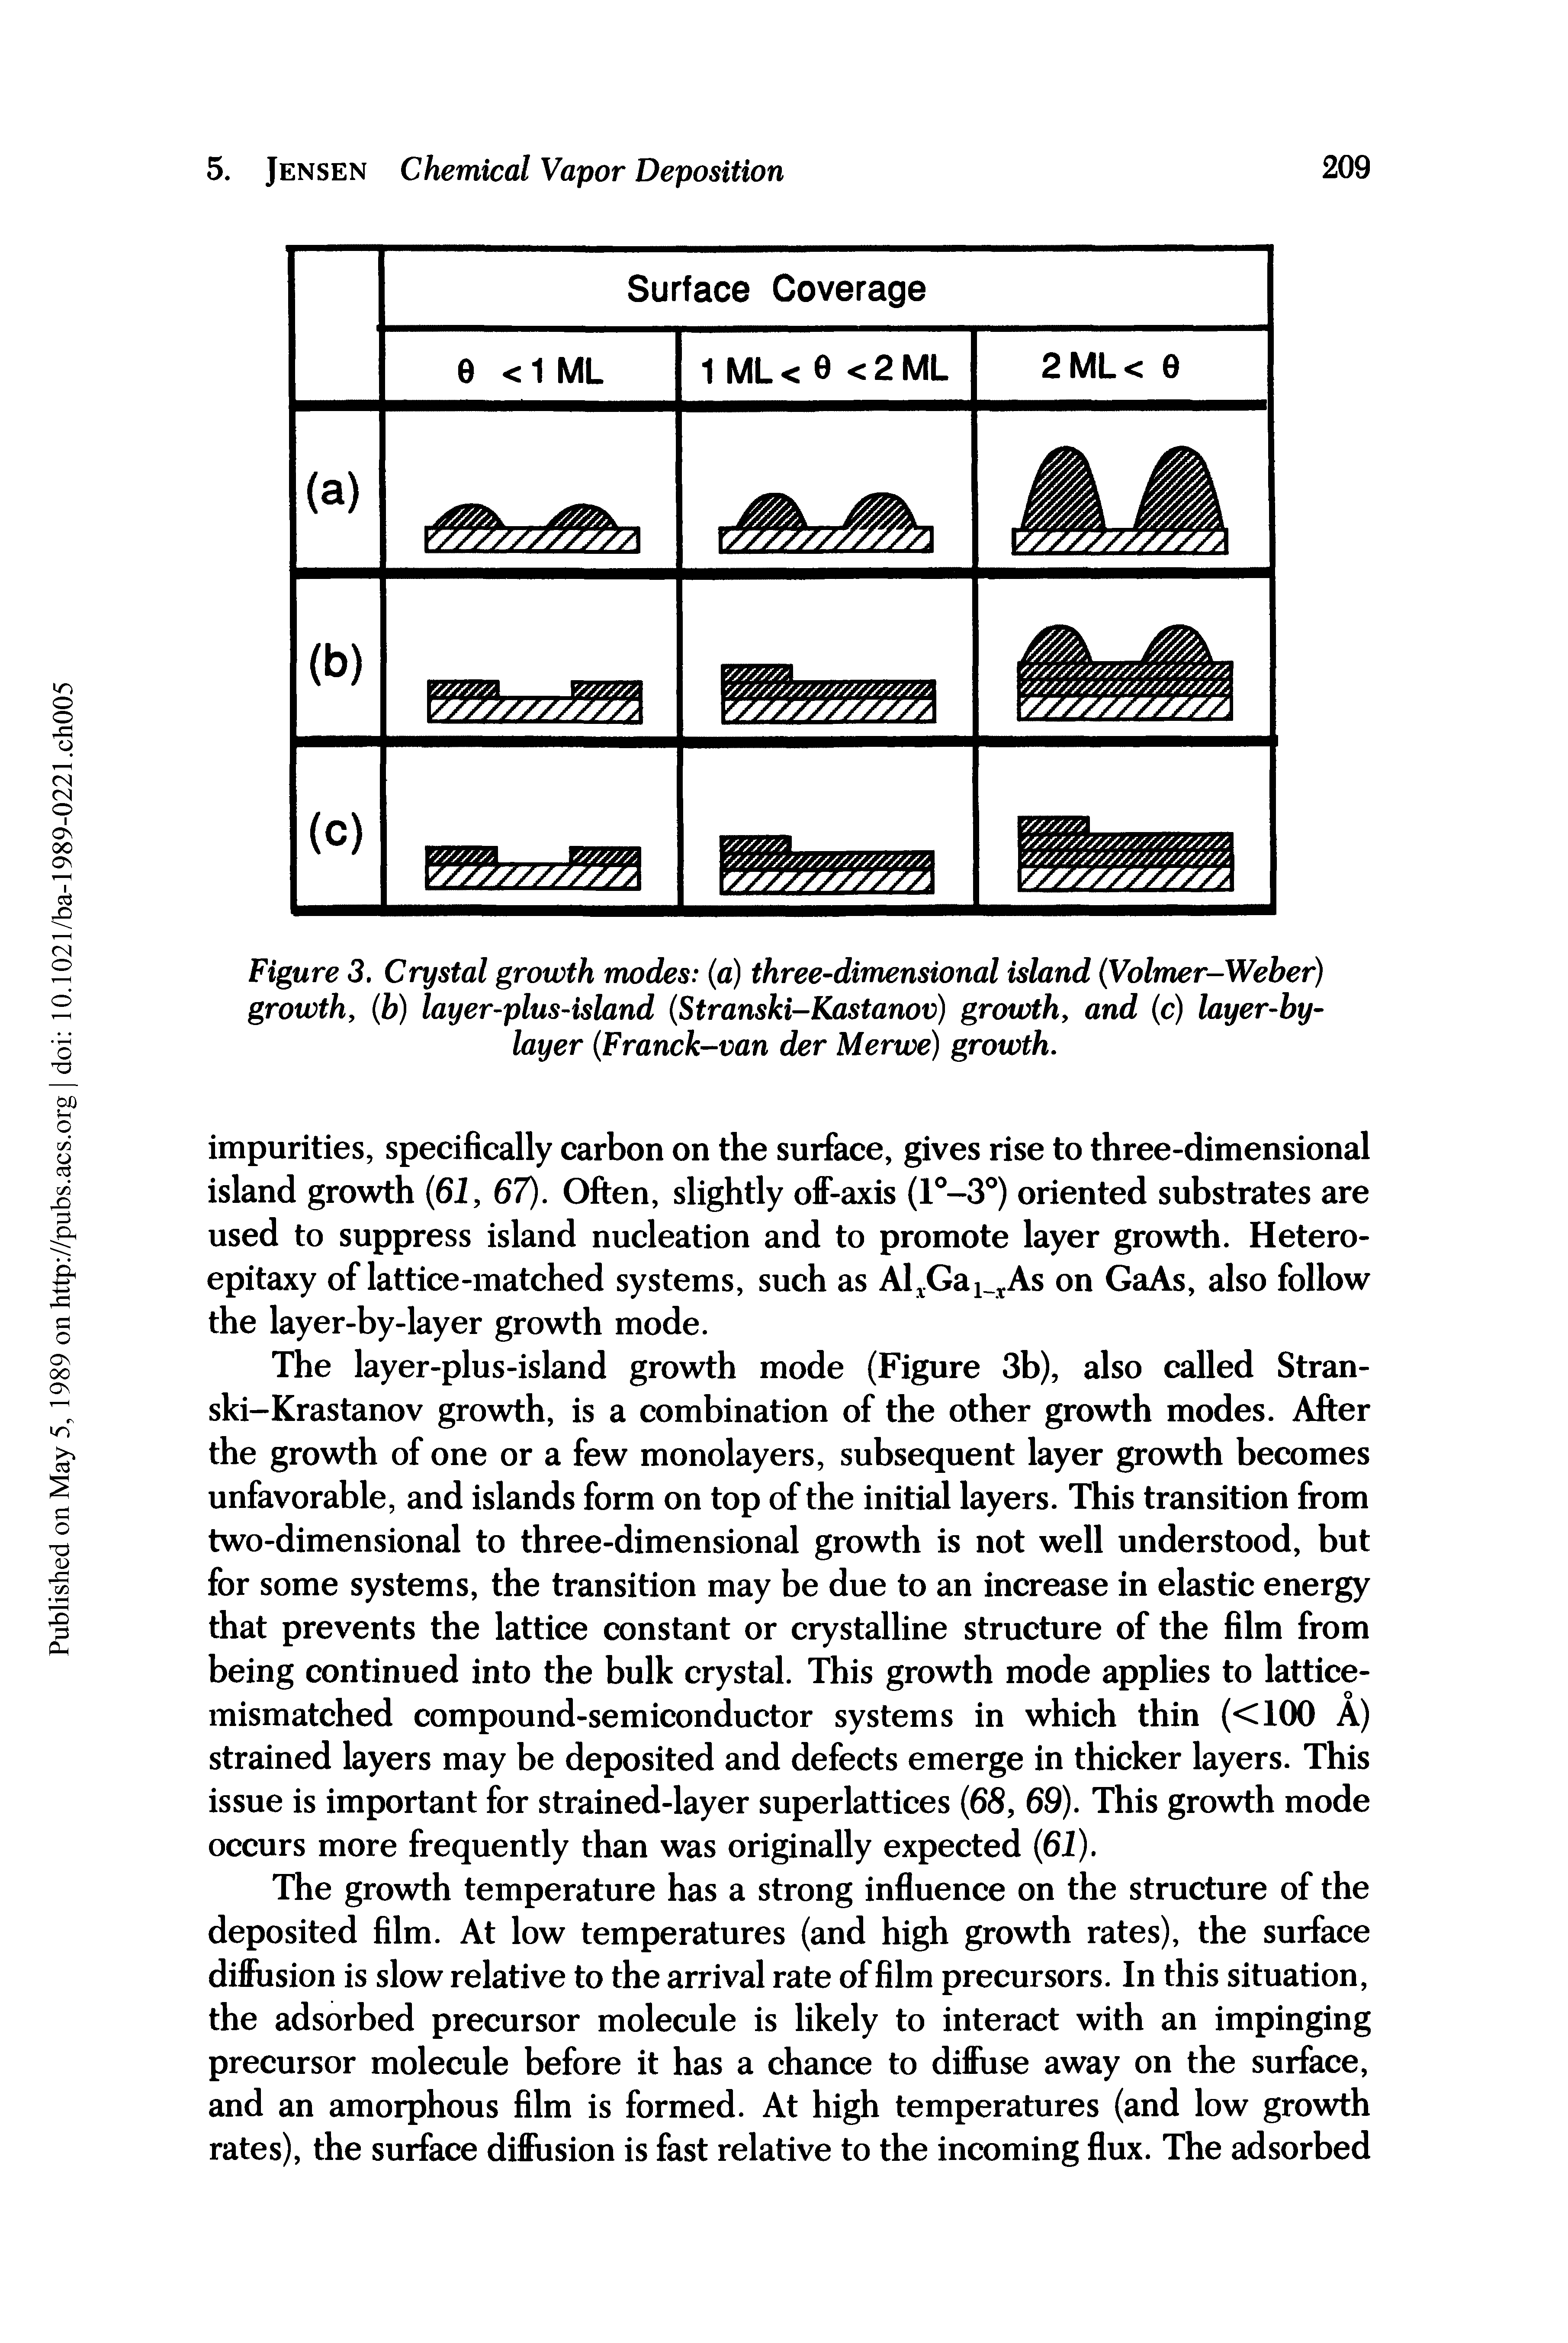 Figure 3. Crystal growth modes (a) three-dimensional island (Volmer-Weber) growth, (b) layer-plus-island (Stranski-Kastanov) growth, and (c) layer-by-layer (Franck-van der Merwe) growth.